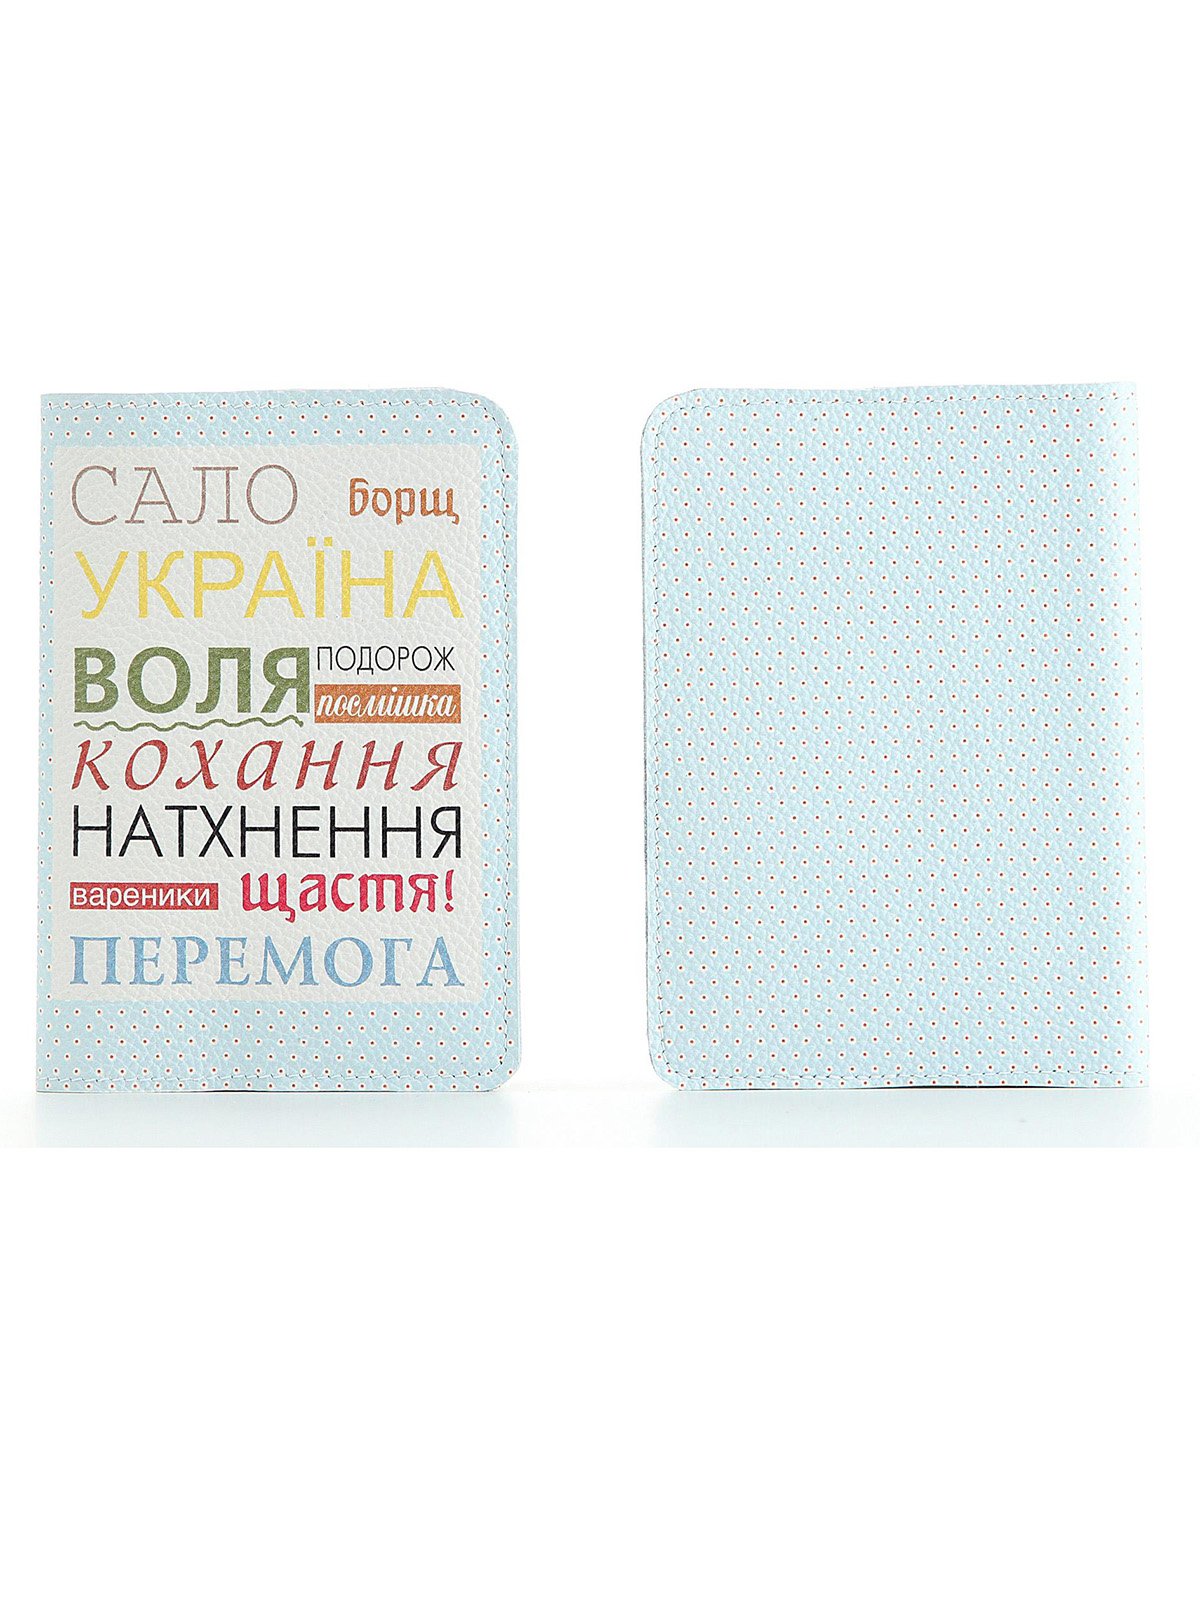 Обложка на паспорт «Сало Борщ Украина» | 1988255